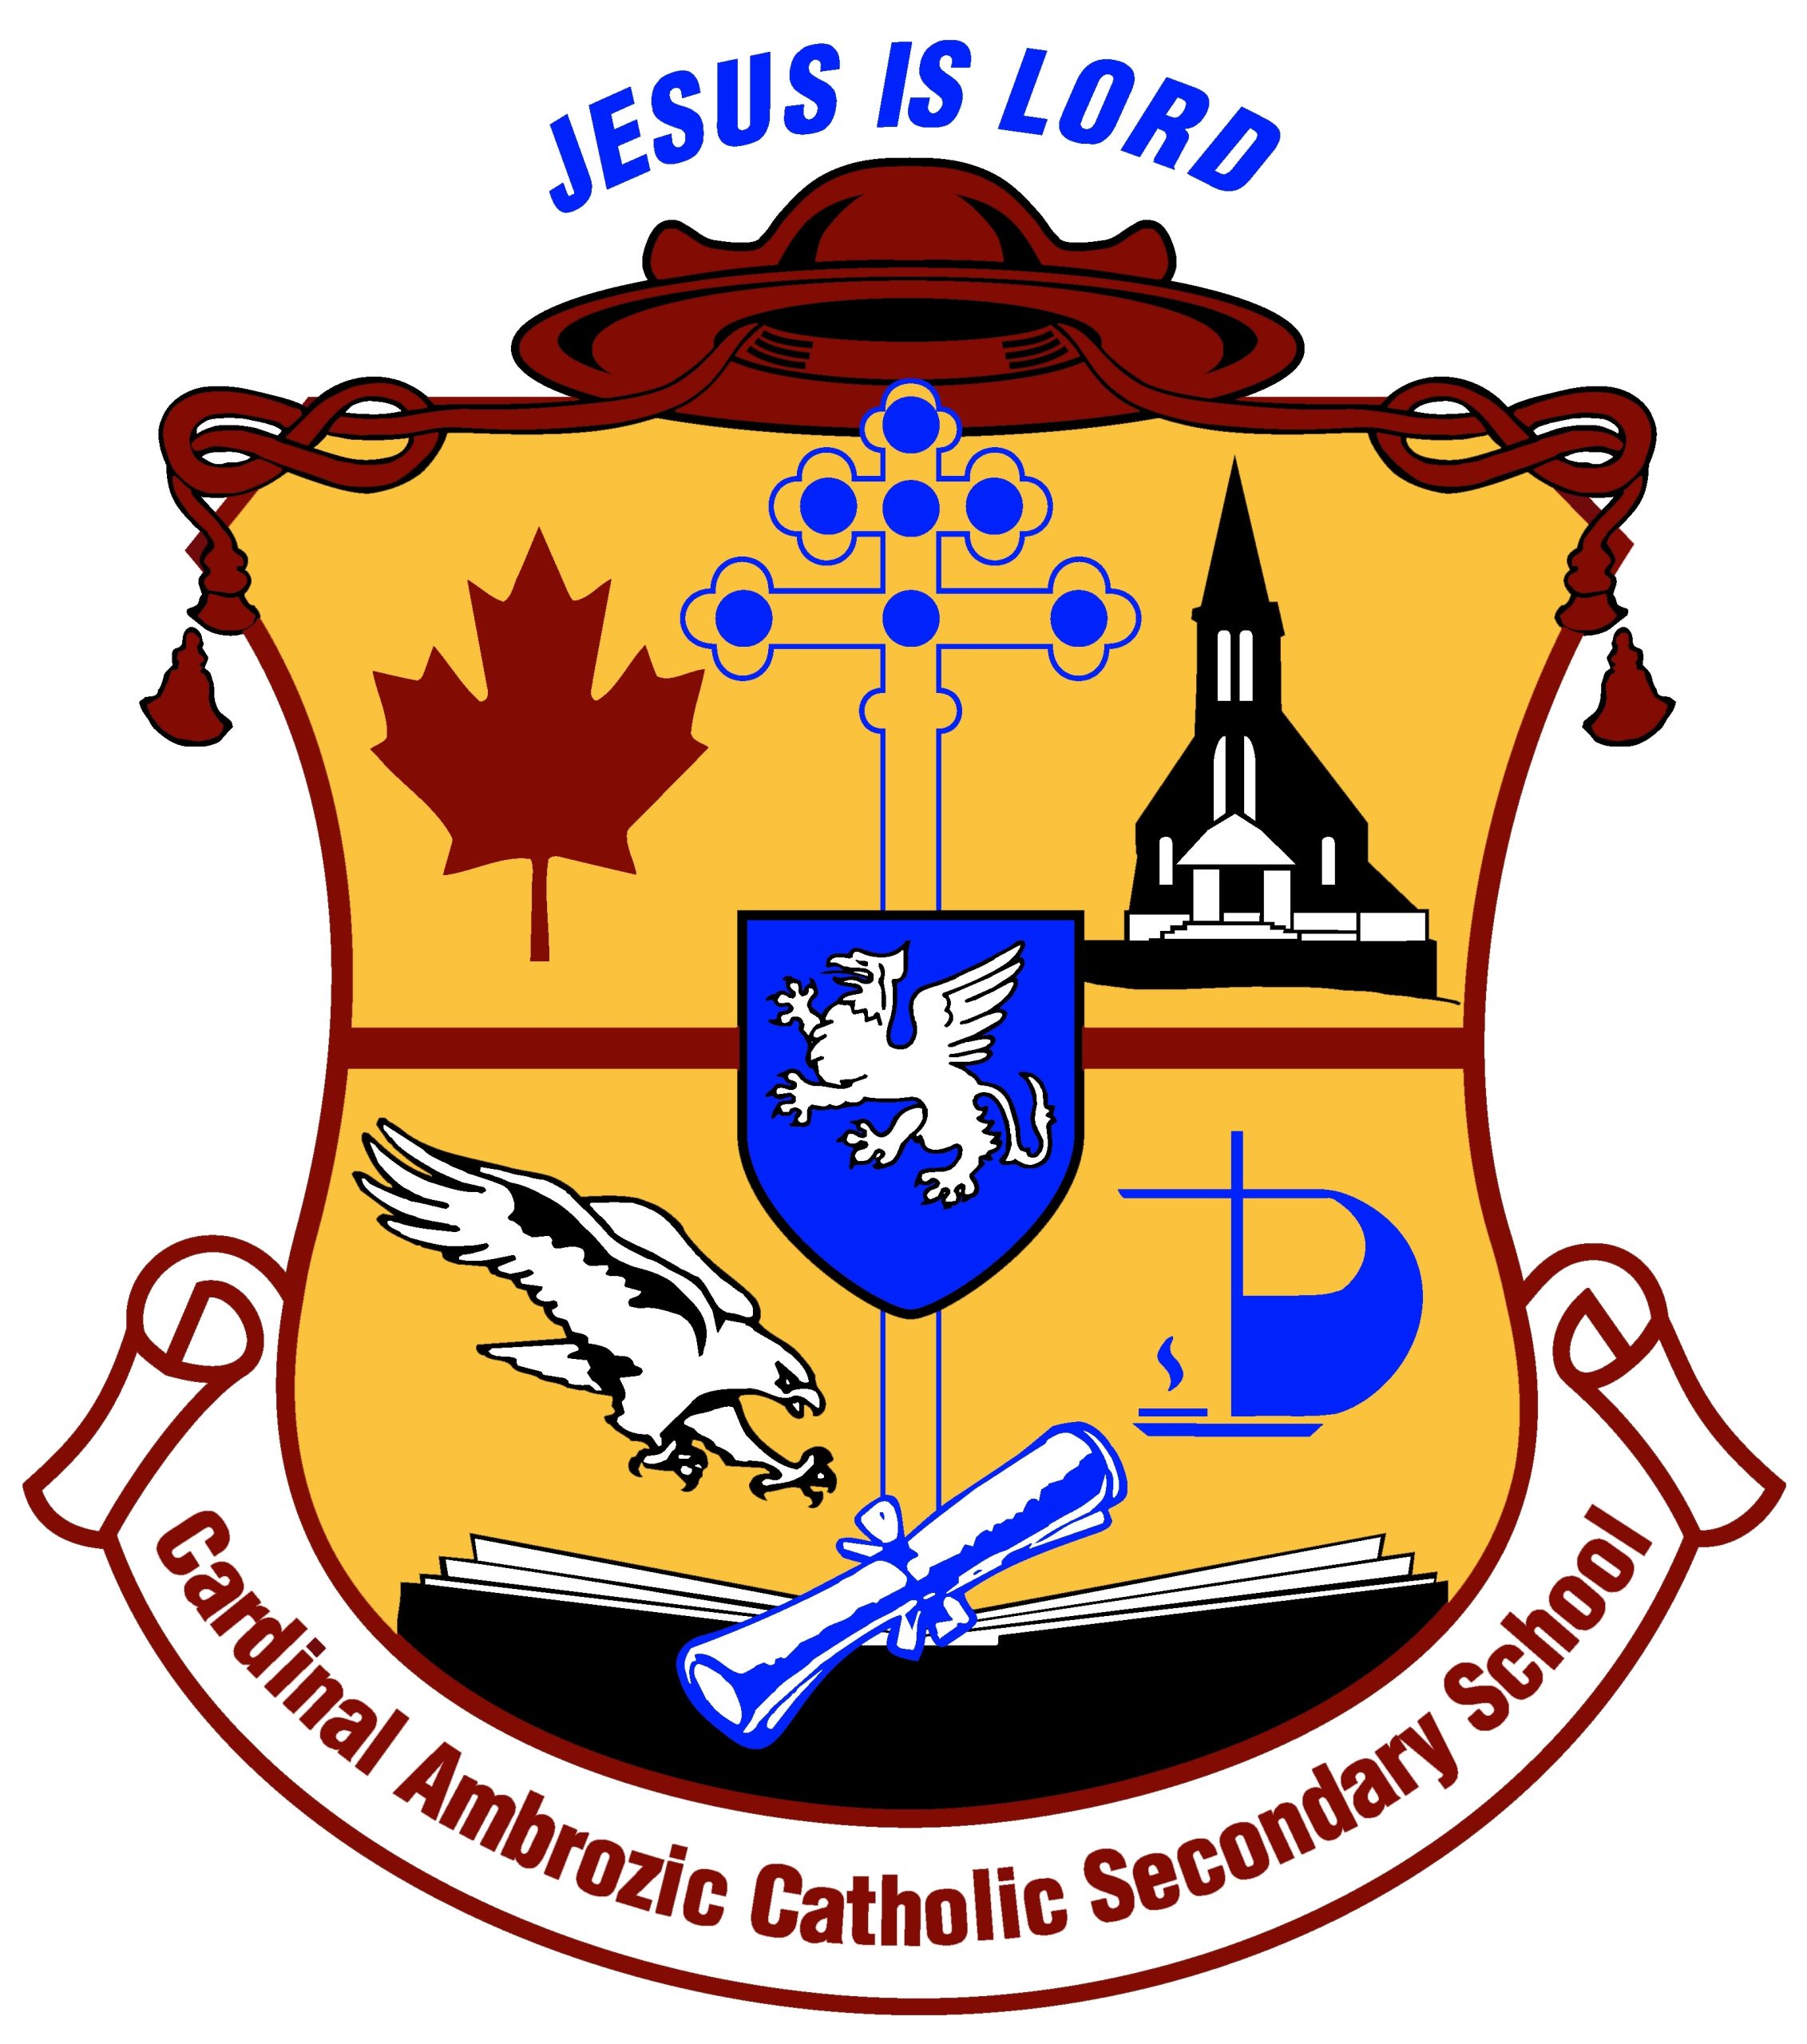 Cardinal Ambrozic Catholic Secondary School